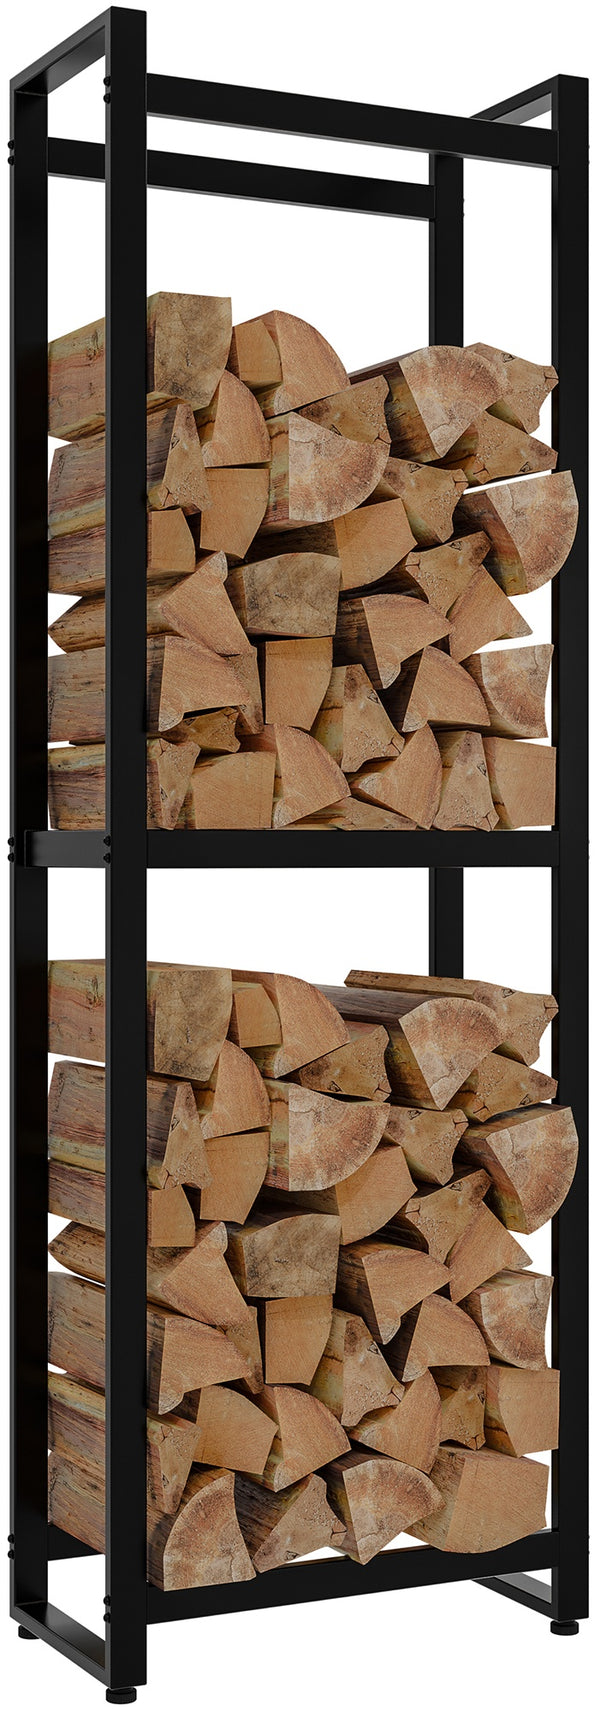 Morson firewood stand